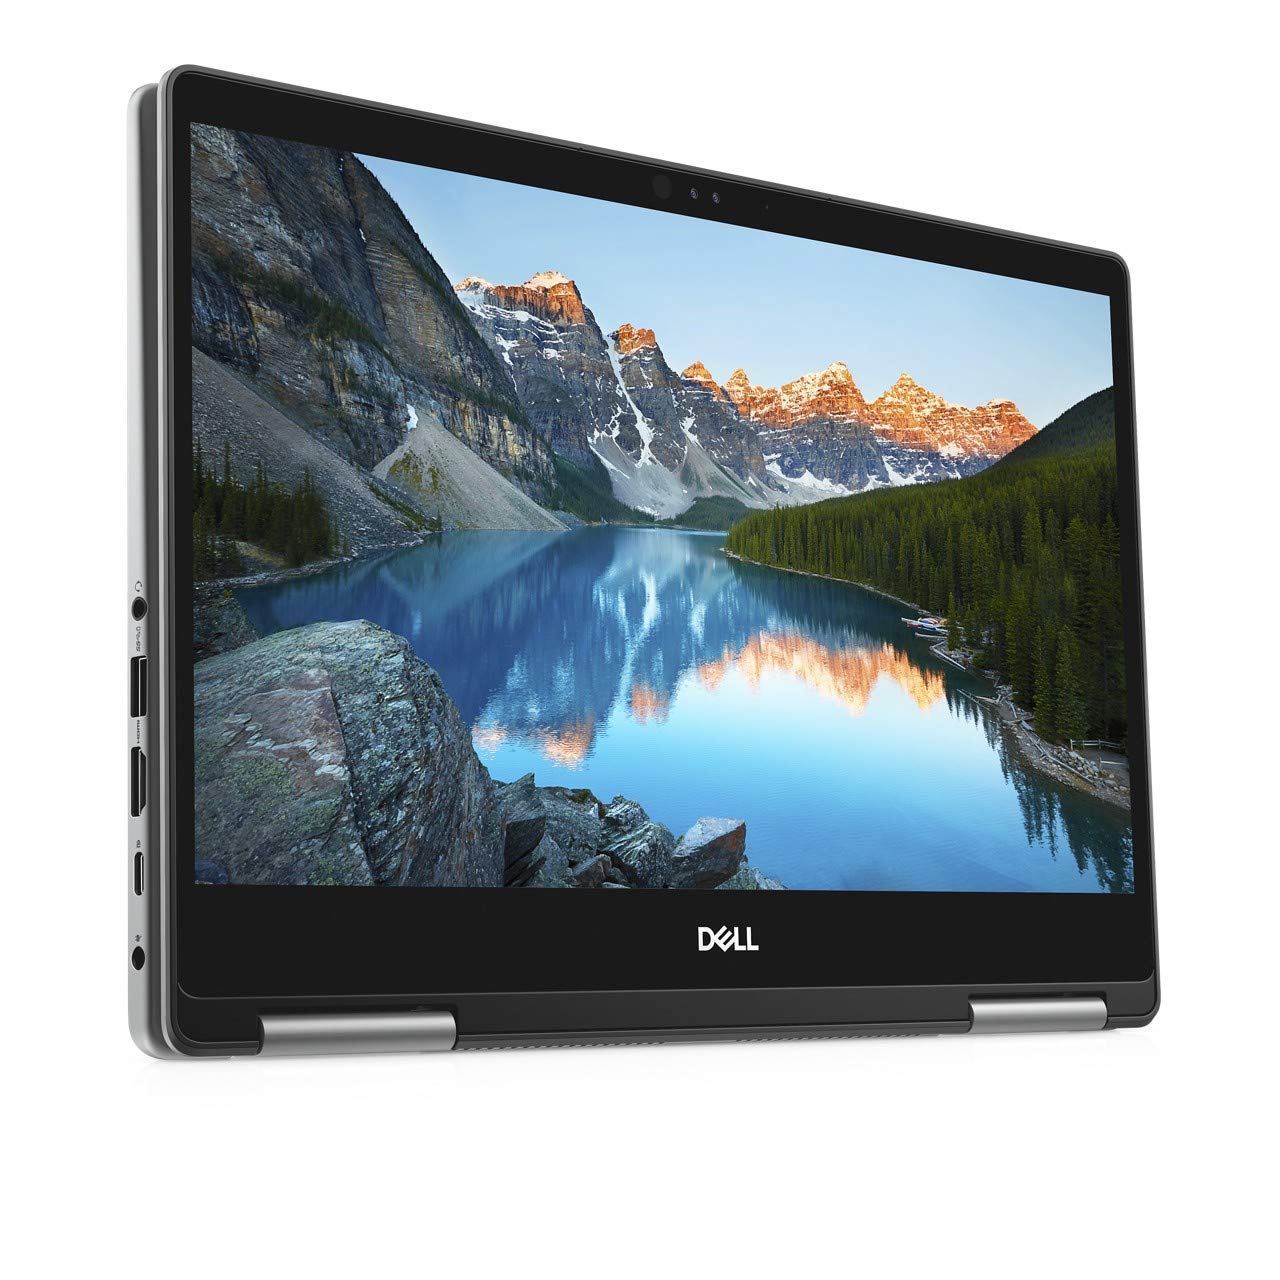 Dell Inspiron 13 7373 13.3-Inch 256GB SSD Core i7 2-in-1 Touch-Screen Laptop (16GB RAM, Intel Core i7-8550U, Windows 10 Home) I7373-7227GRY - Era Gray